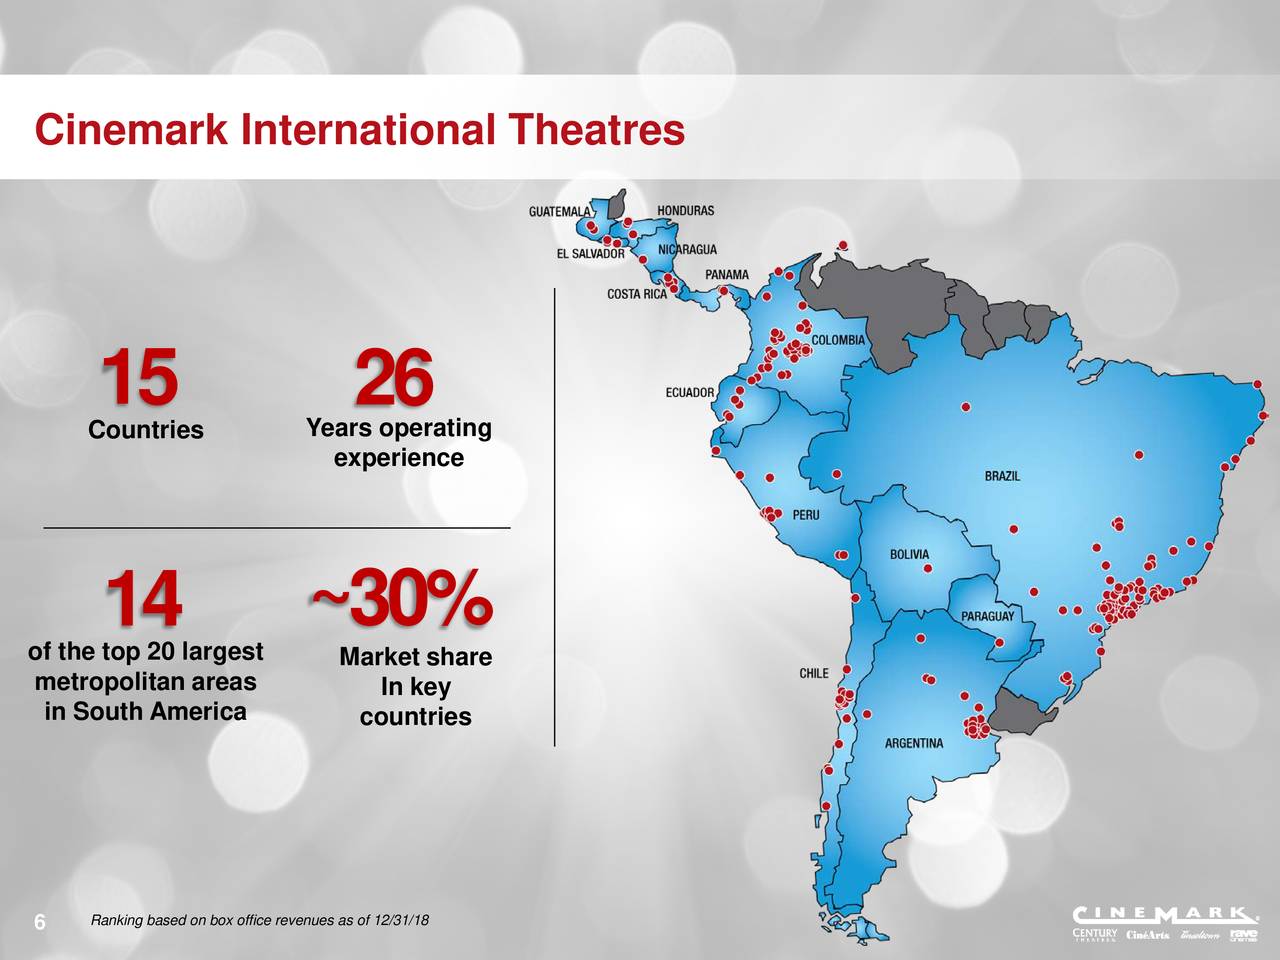 Cinemark International Theatres